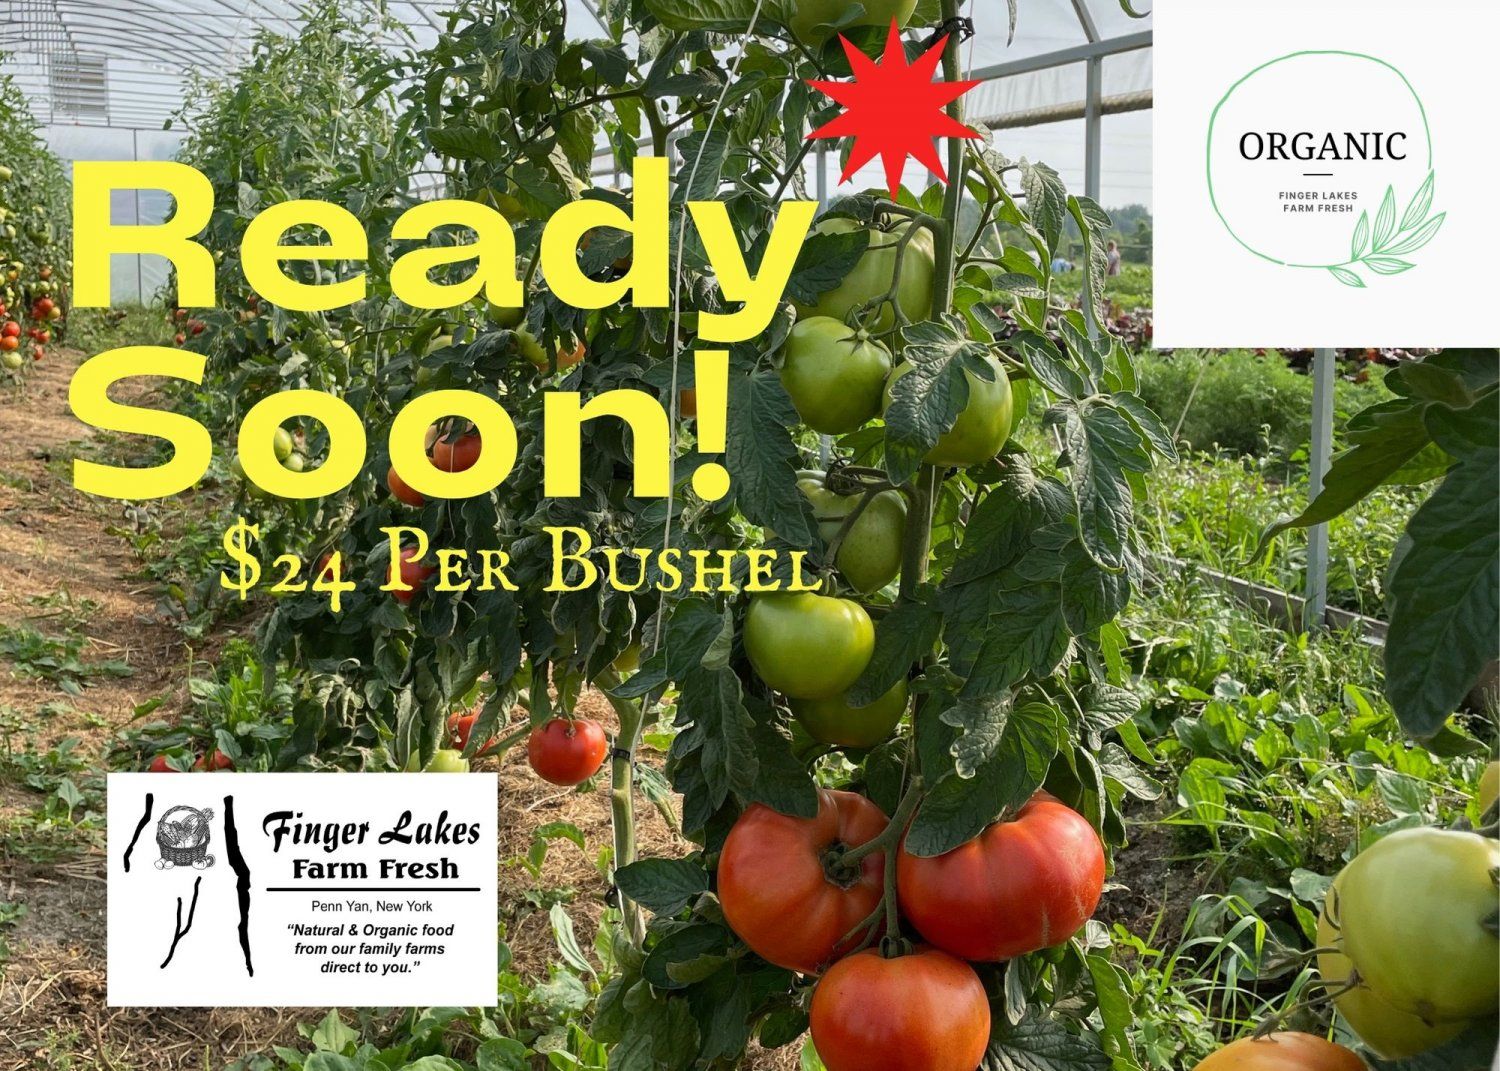 Next Happening: Welcome Heirloom Tomatoes!